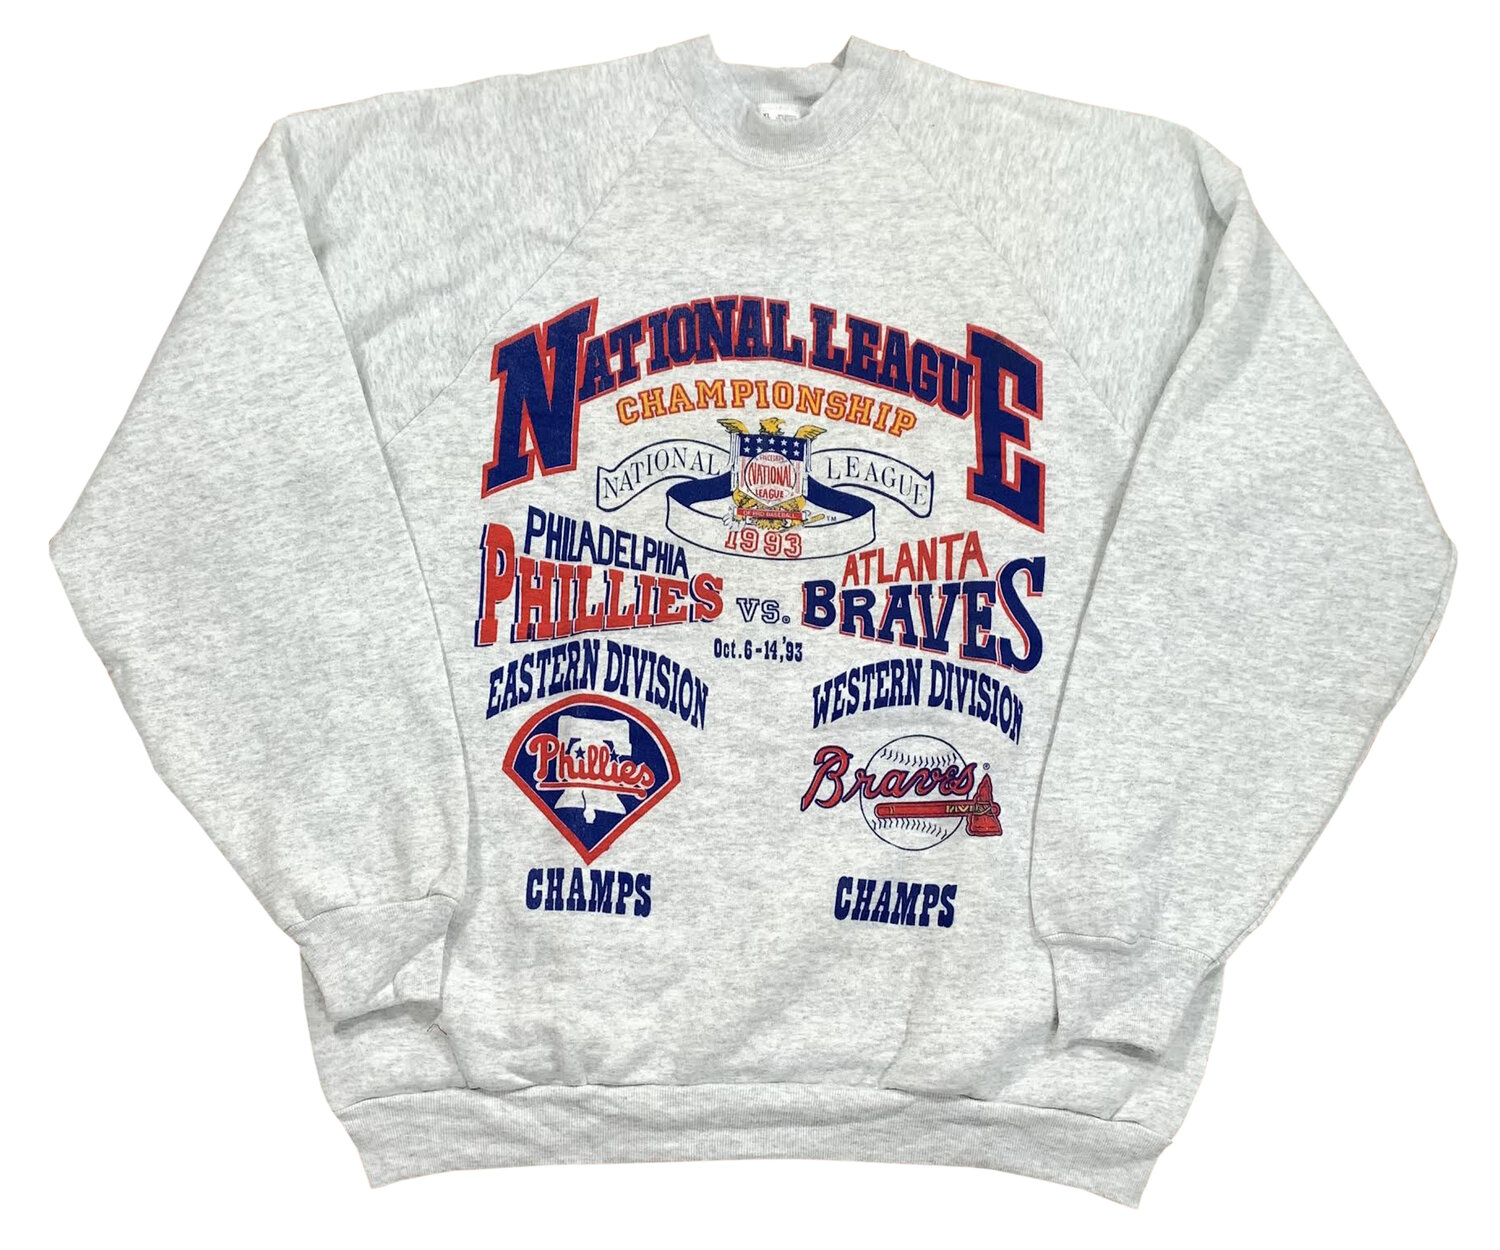 Vintage Toronto Blue Jays 1993 World Series Champions MLB Shirt, hoodie,  longsleeve, sweater